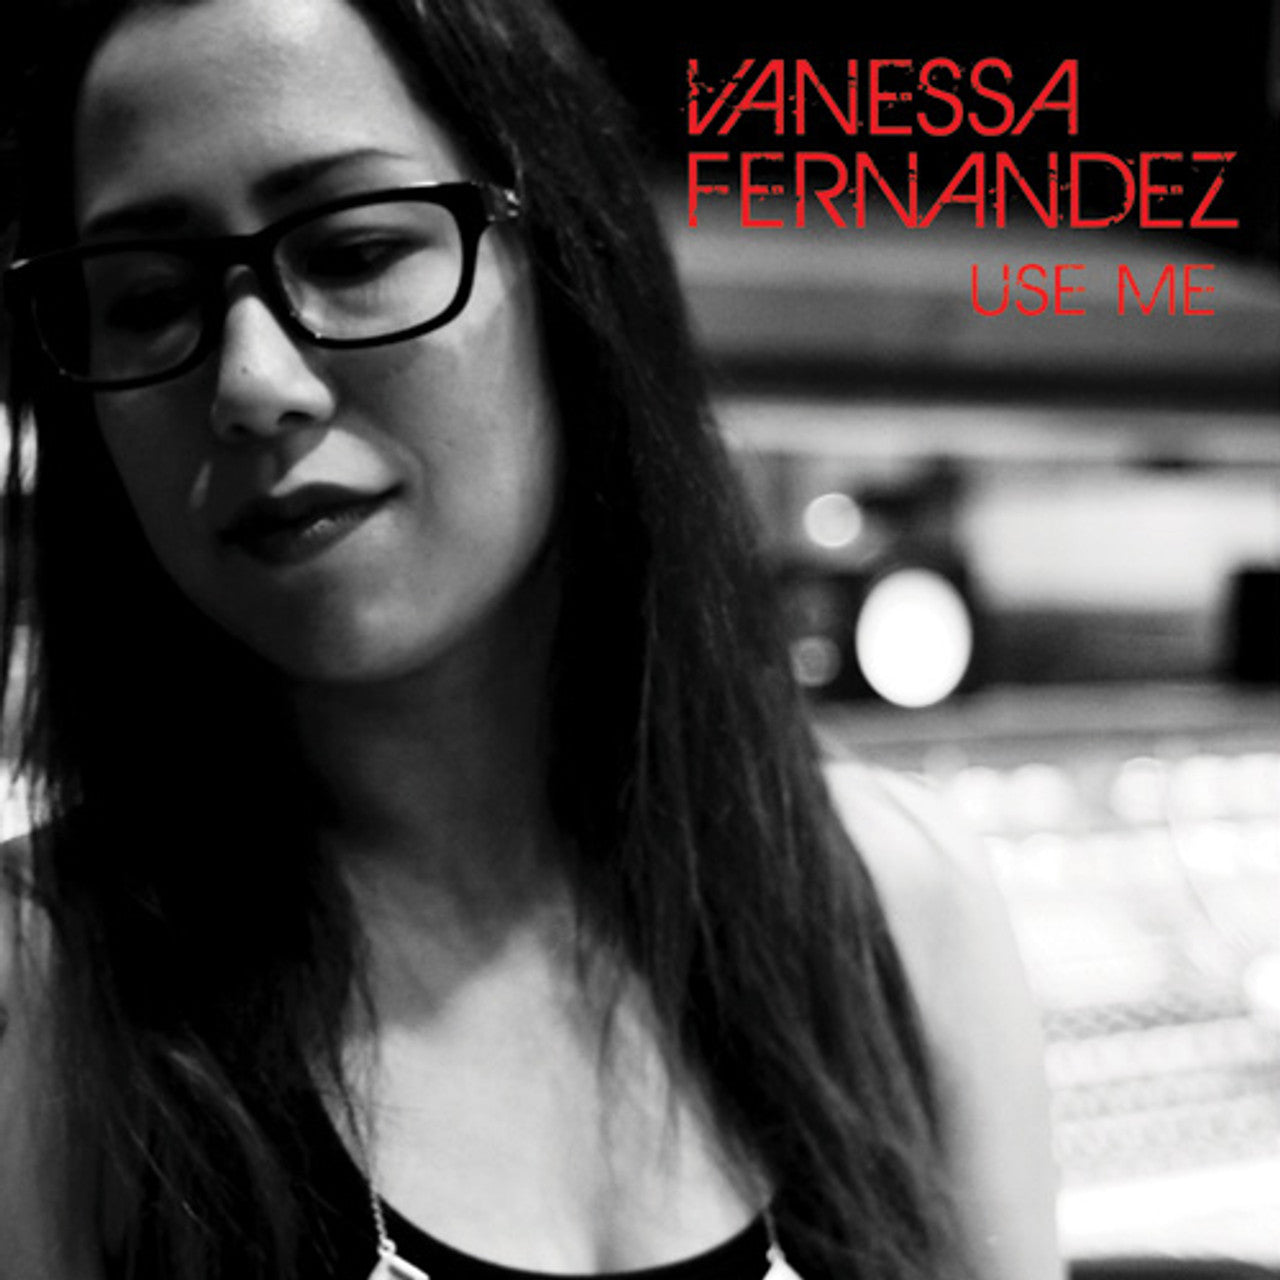 Vanessa Fernandez | Use Me